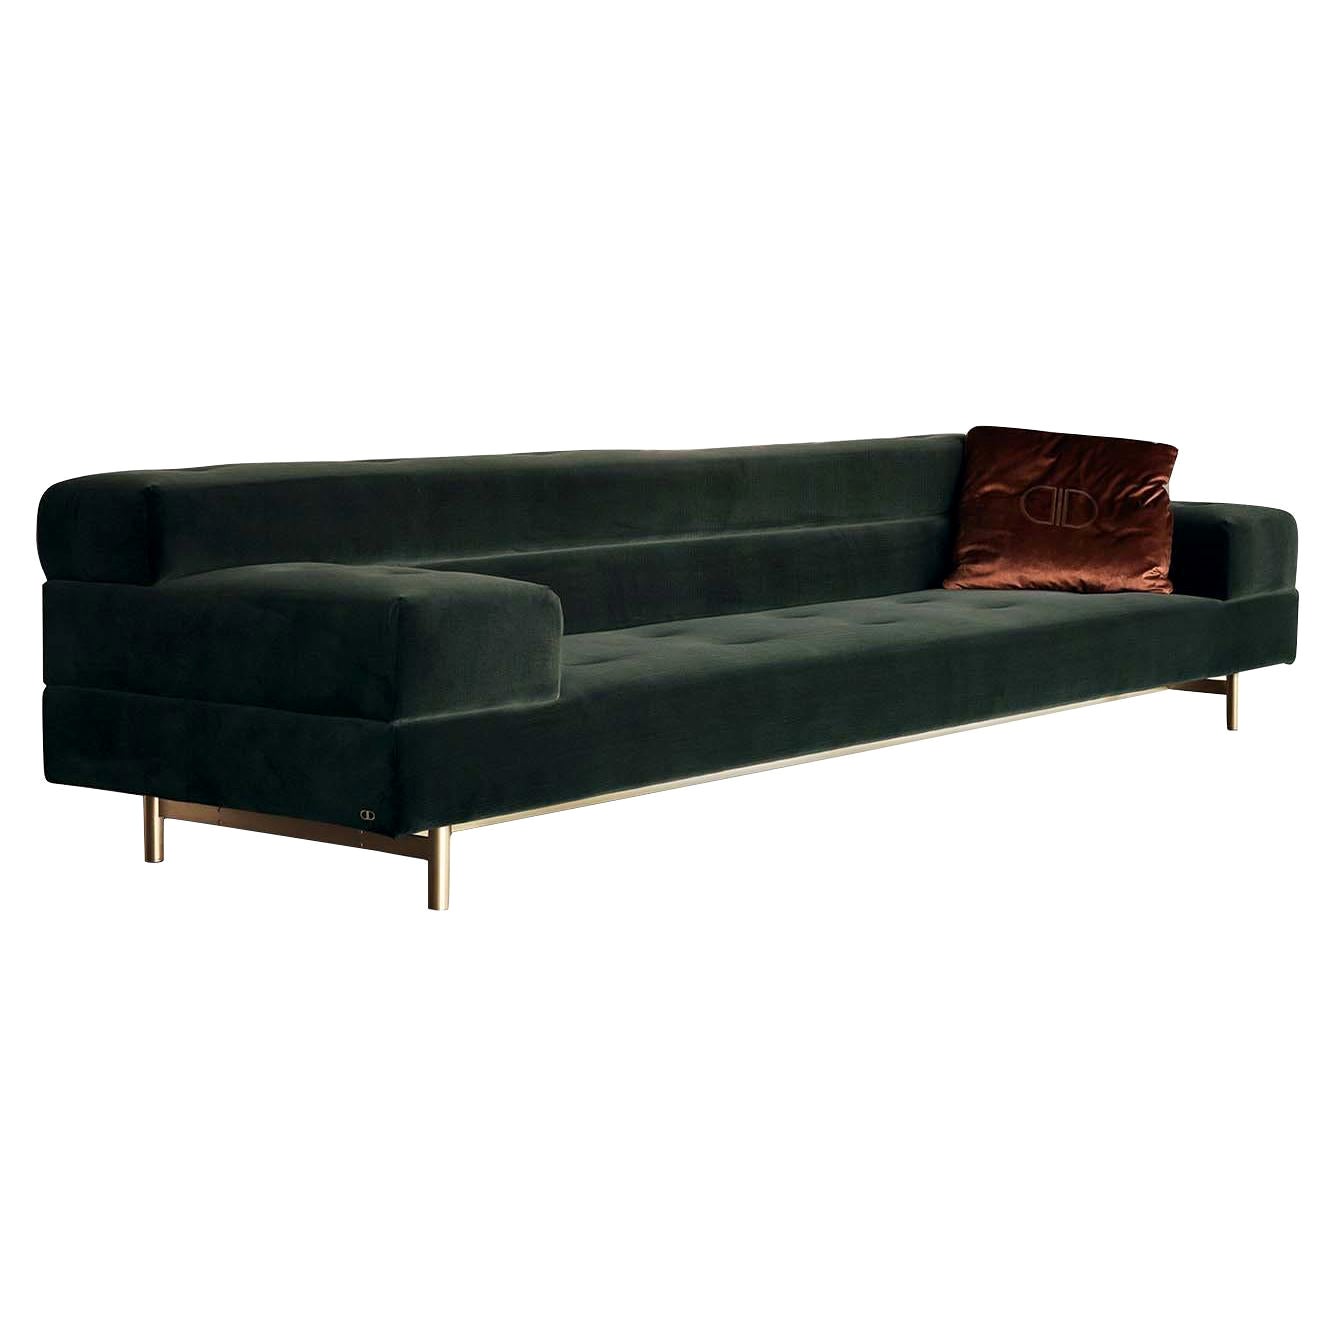 Lifestyle-Sofa in Grün